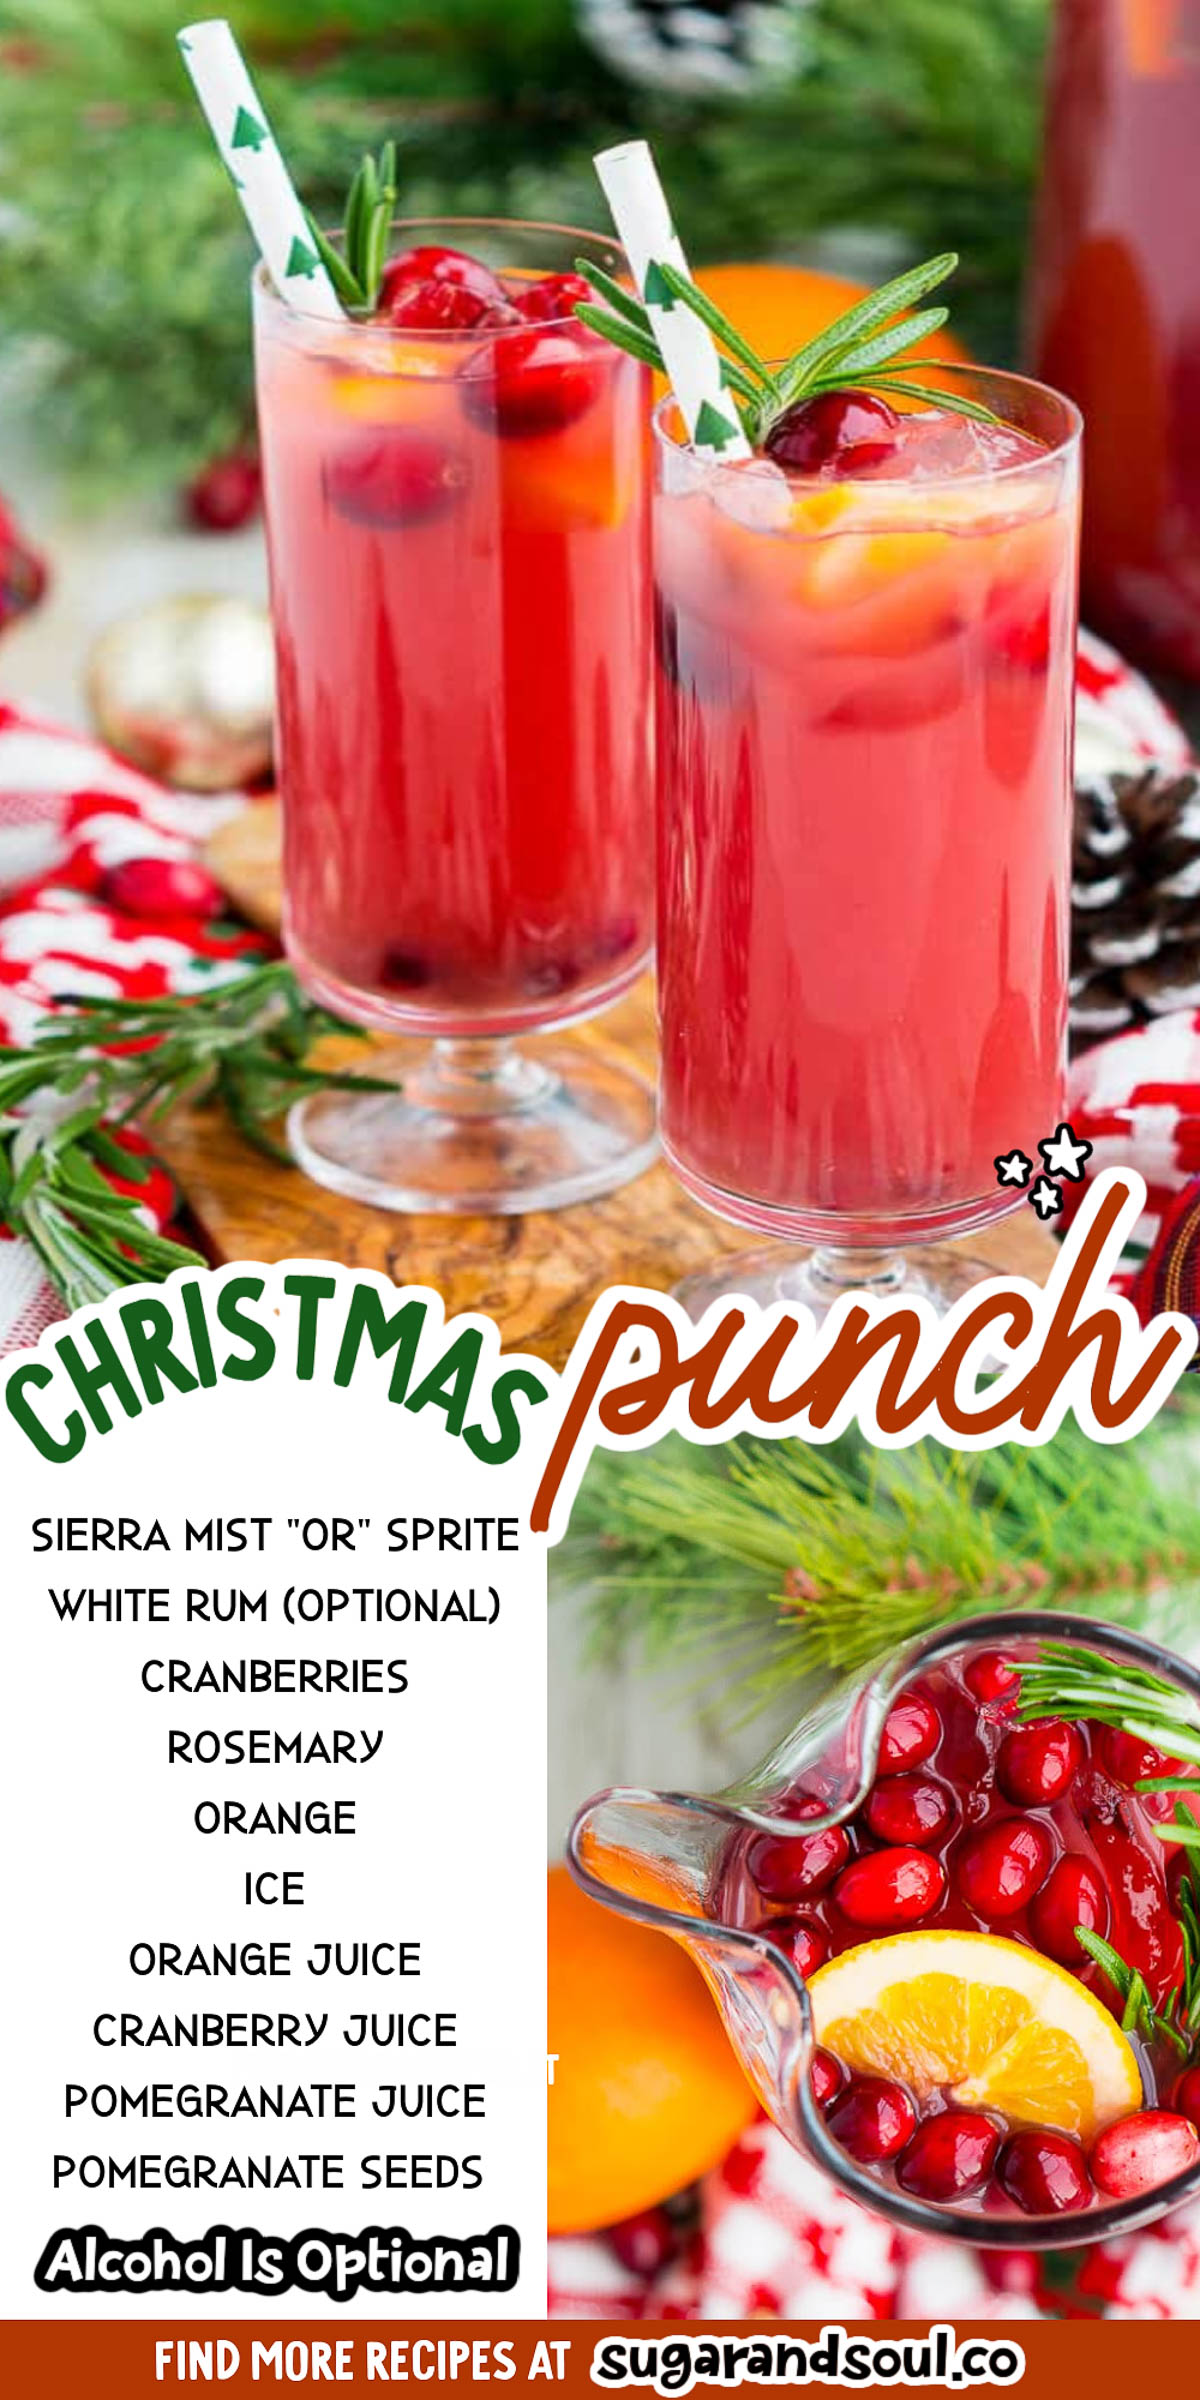 https://www.sugarandsoul.co/wp-content/uploads/2021/11/Christmas-Punch.jpg